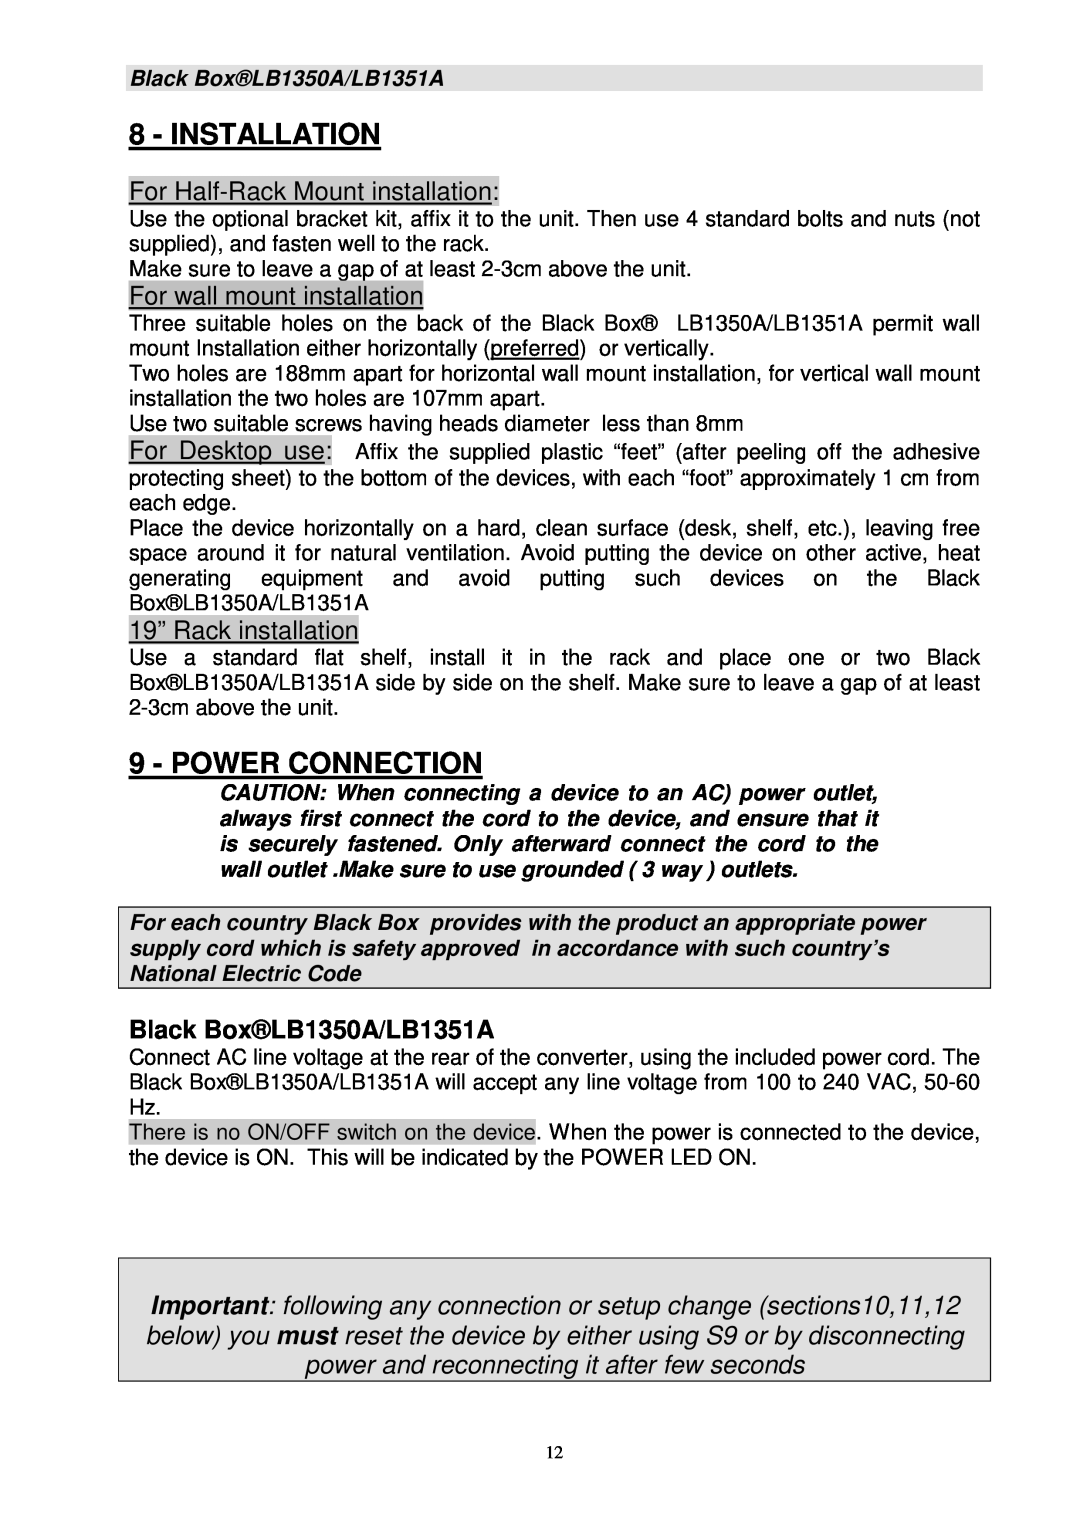 Black Box manual Installation, Power Connection, Black BoxLB1350A/LB1351A 